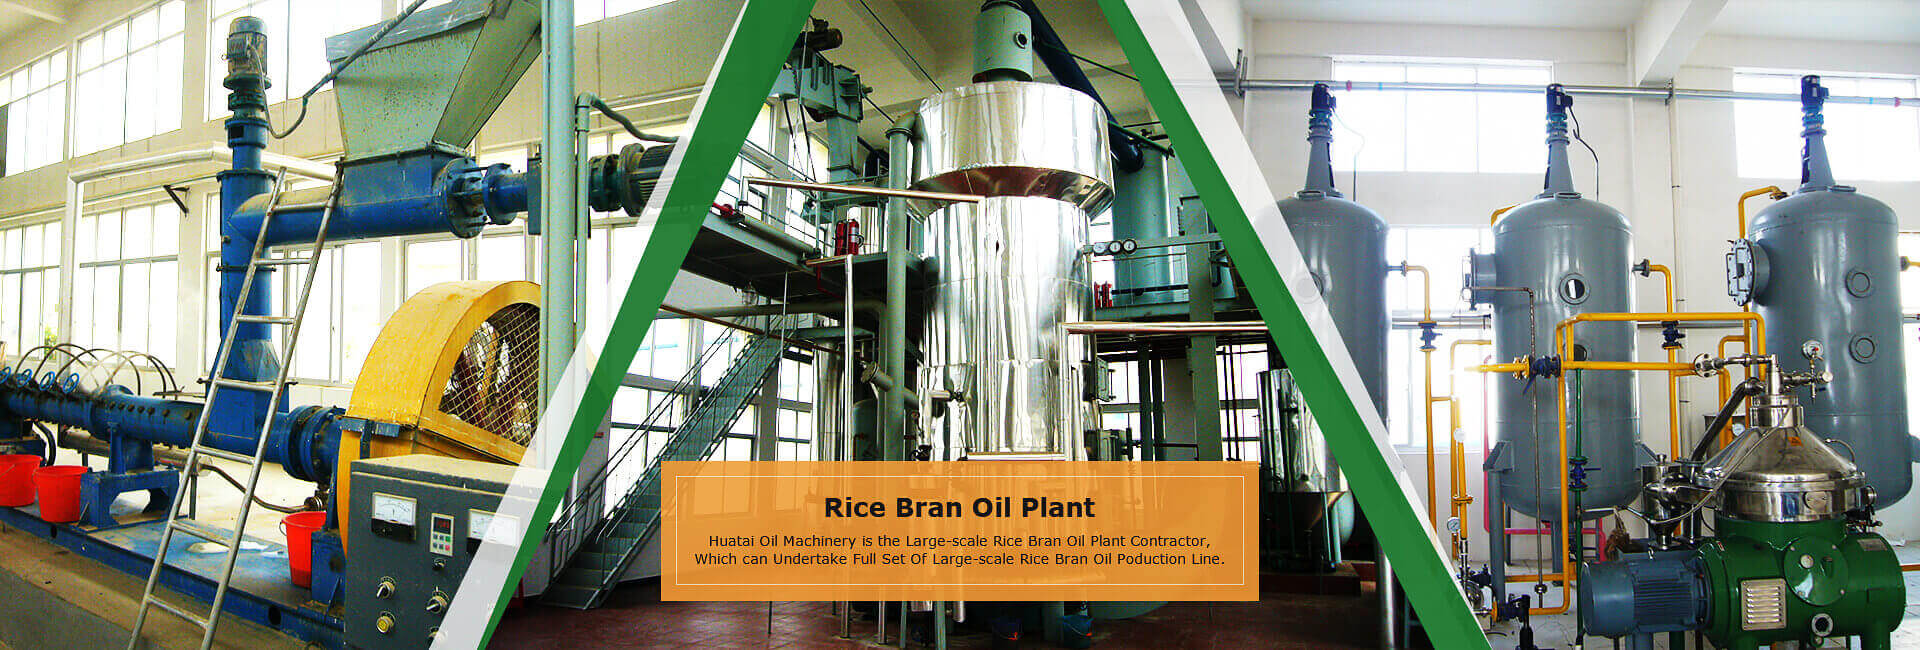 Rice Bran Oil Plant